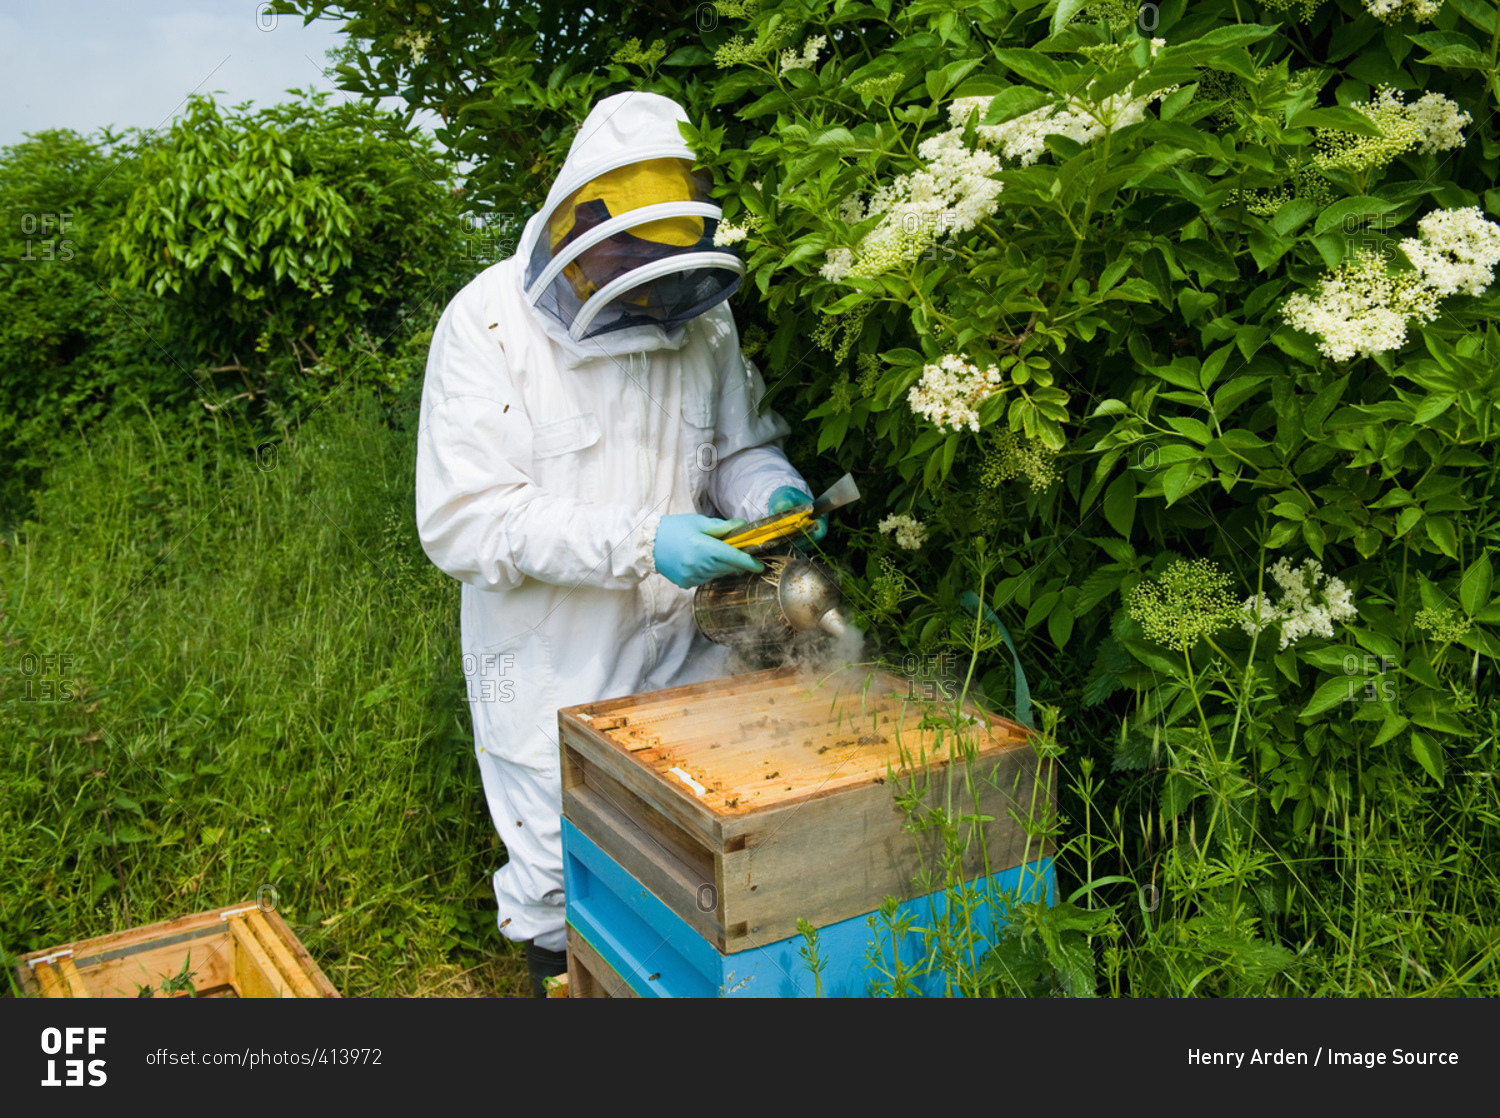 Beekeeper wearing protective clothing using bee smoker on hive